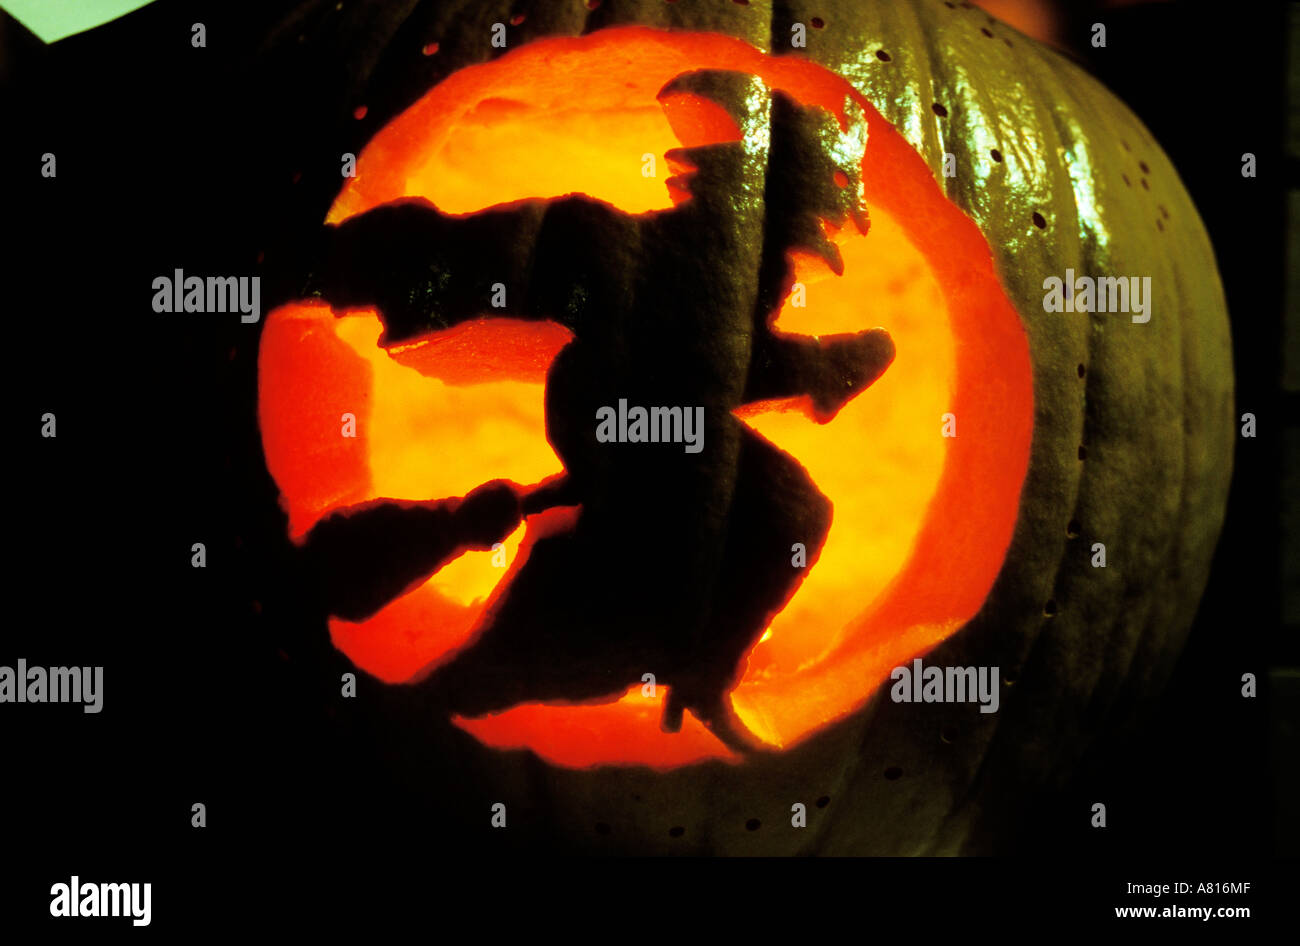 United States, Massachusetts, Halloween festivals, carved pumpkin Stock Photo